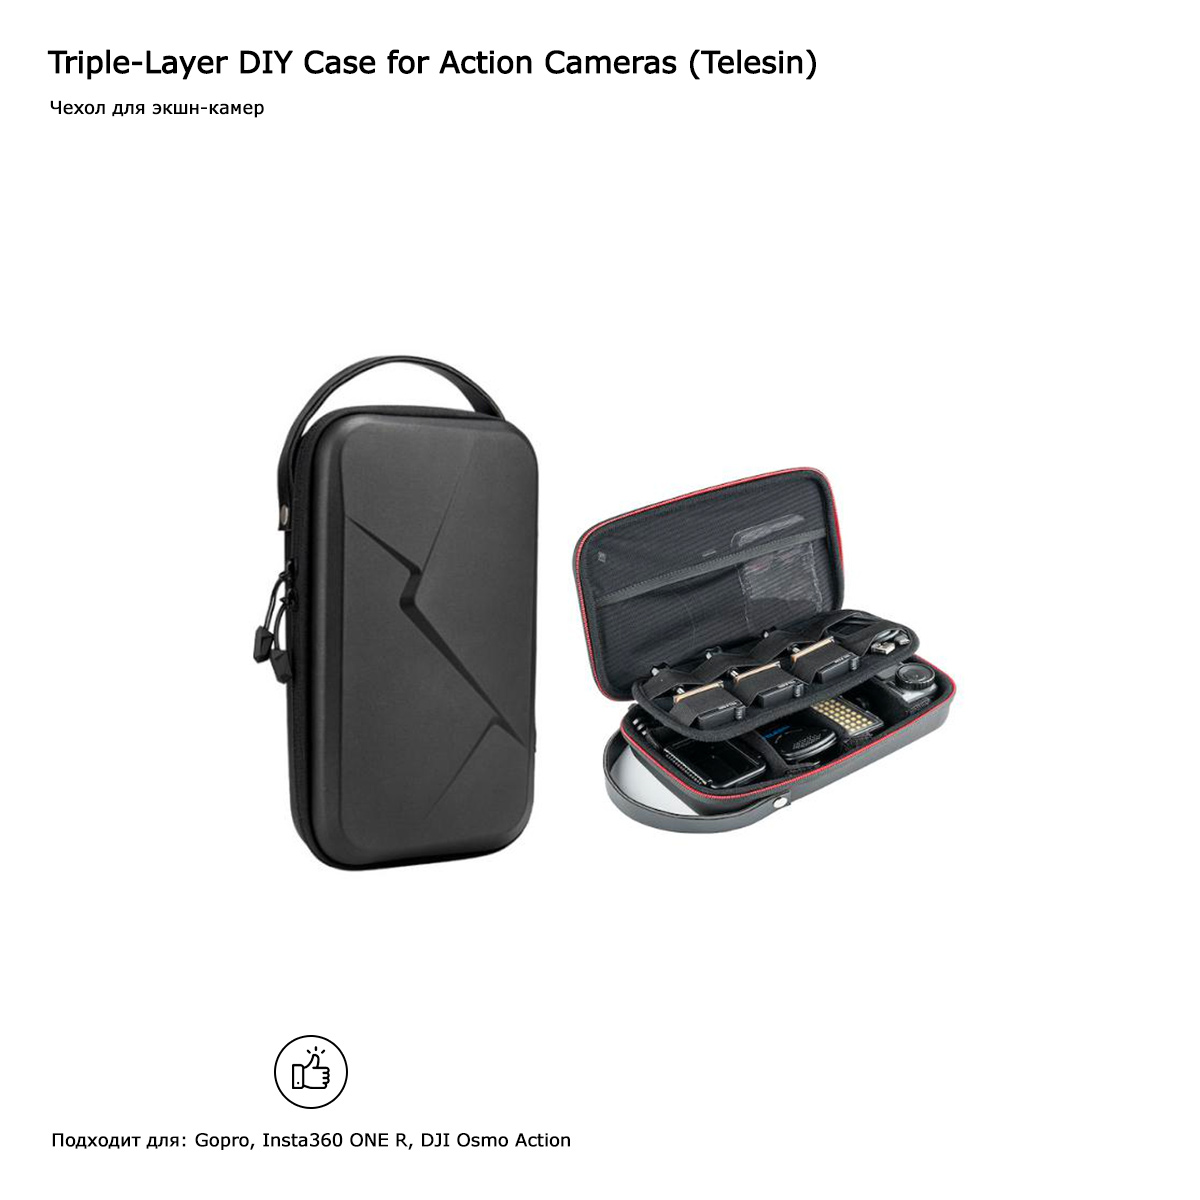 Triple-Layer DIY Case for Action Cameras (Telesin)